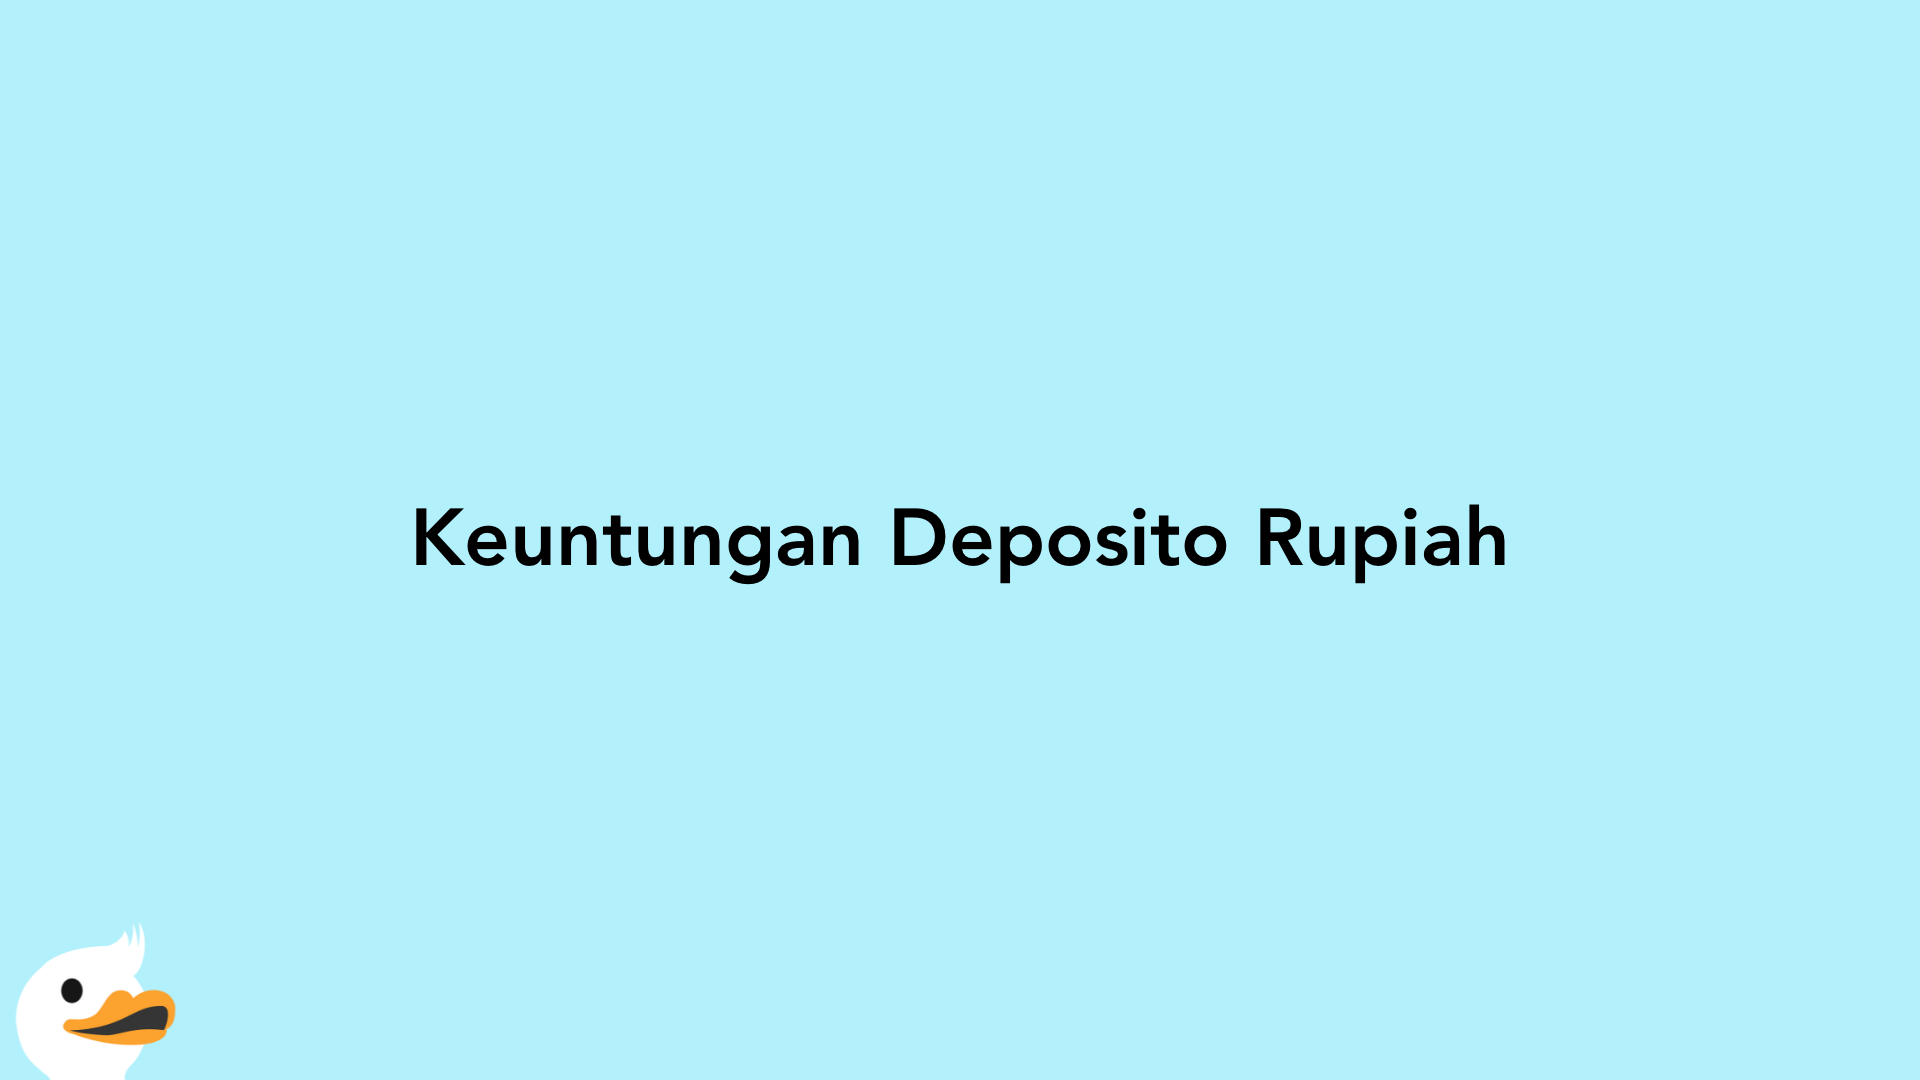 Keuntungan Deposito Rupiah